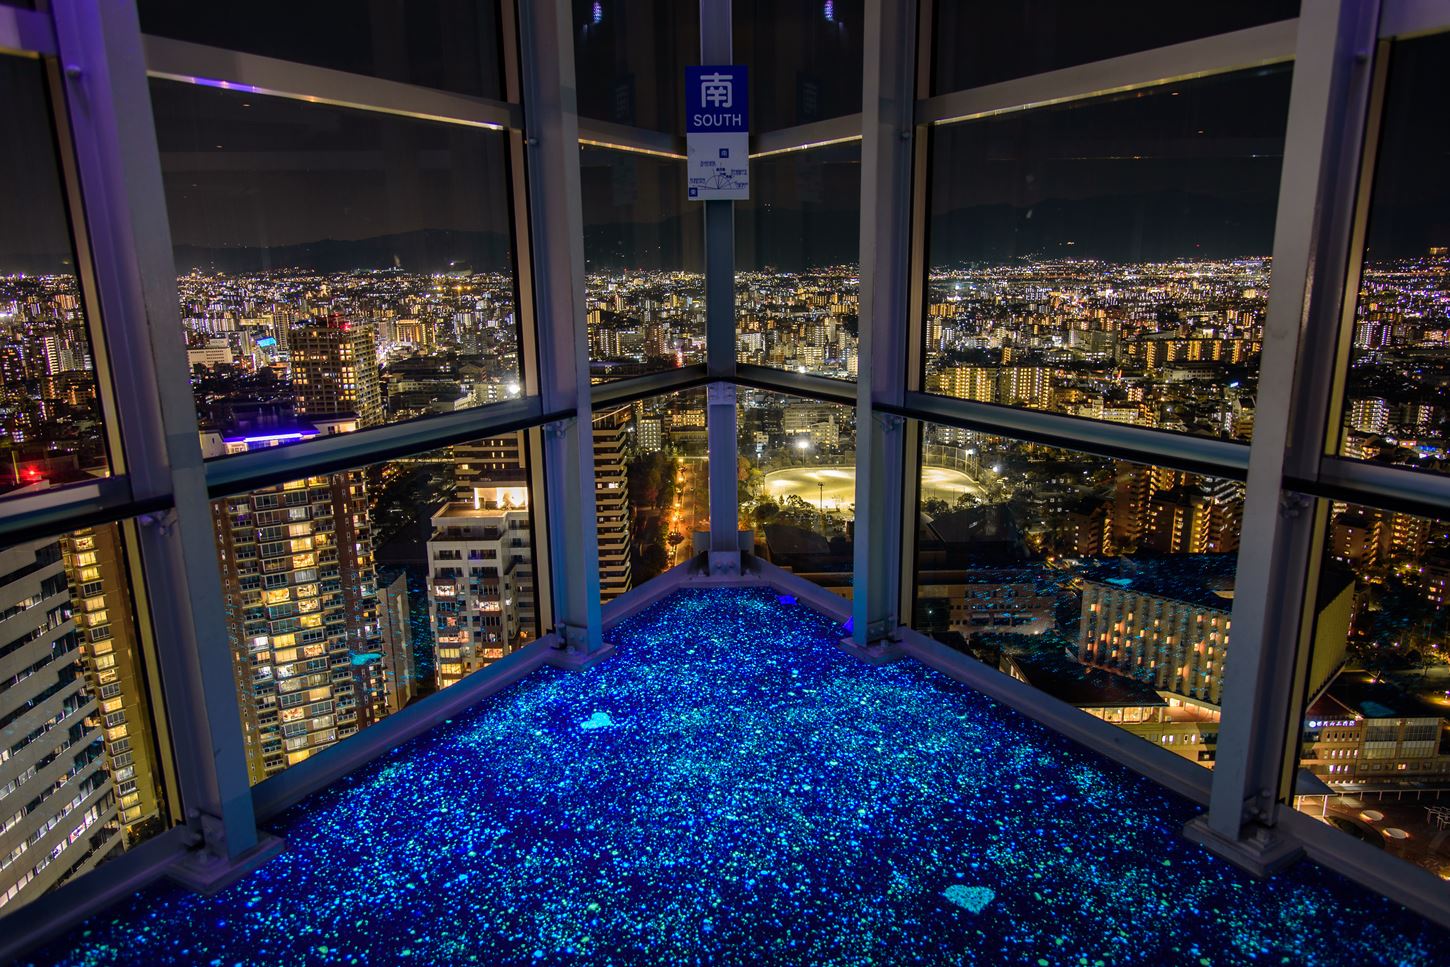 Scene from Fukuoka Tower at night on 15 November 2015 in Fukuoka, Japan = Shutterstock